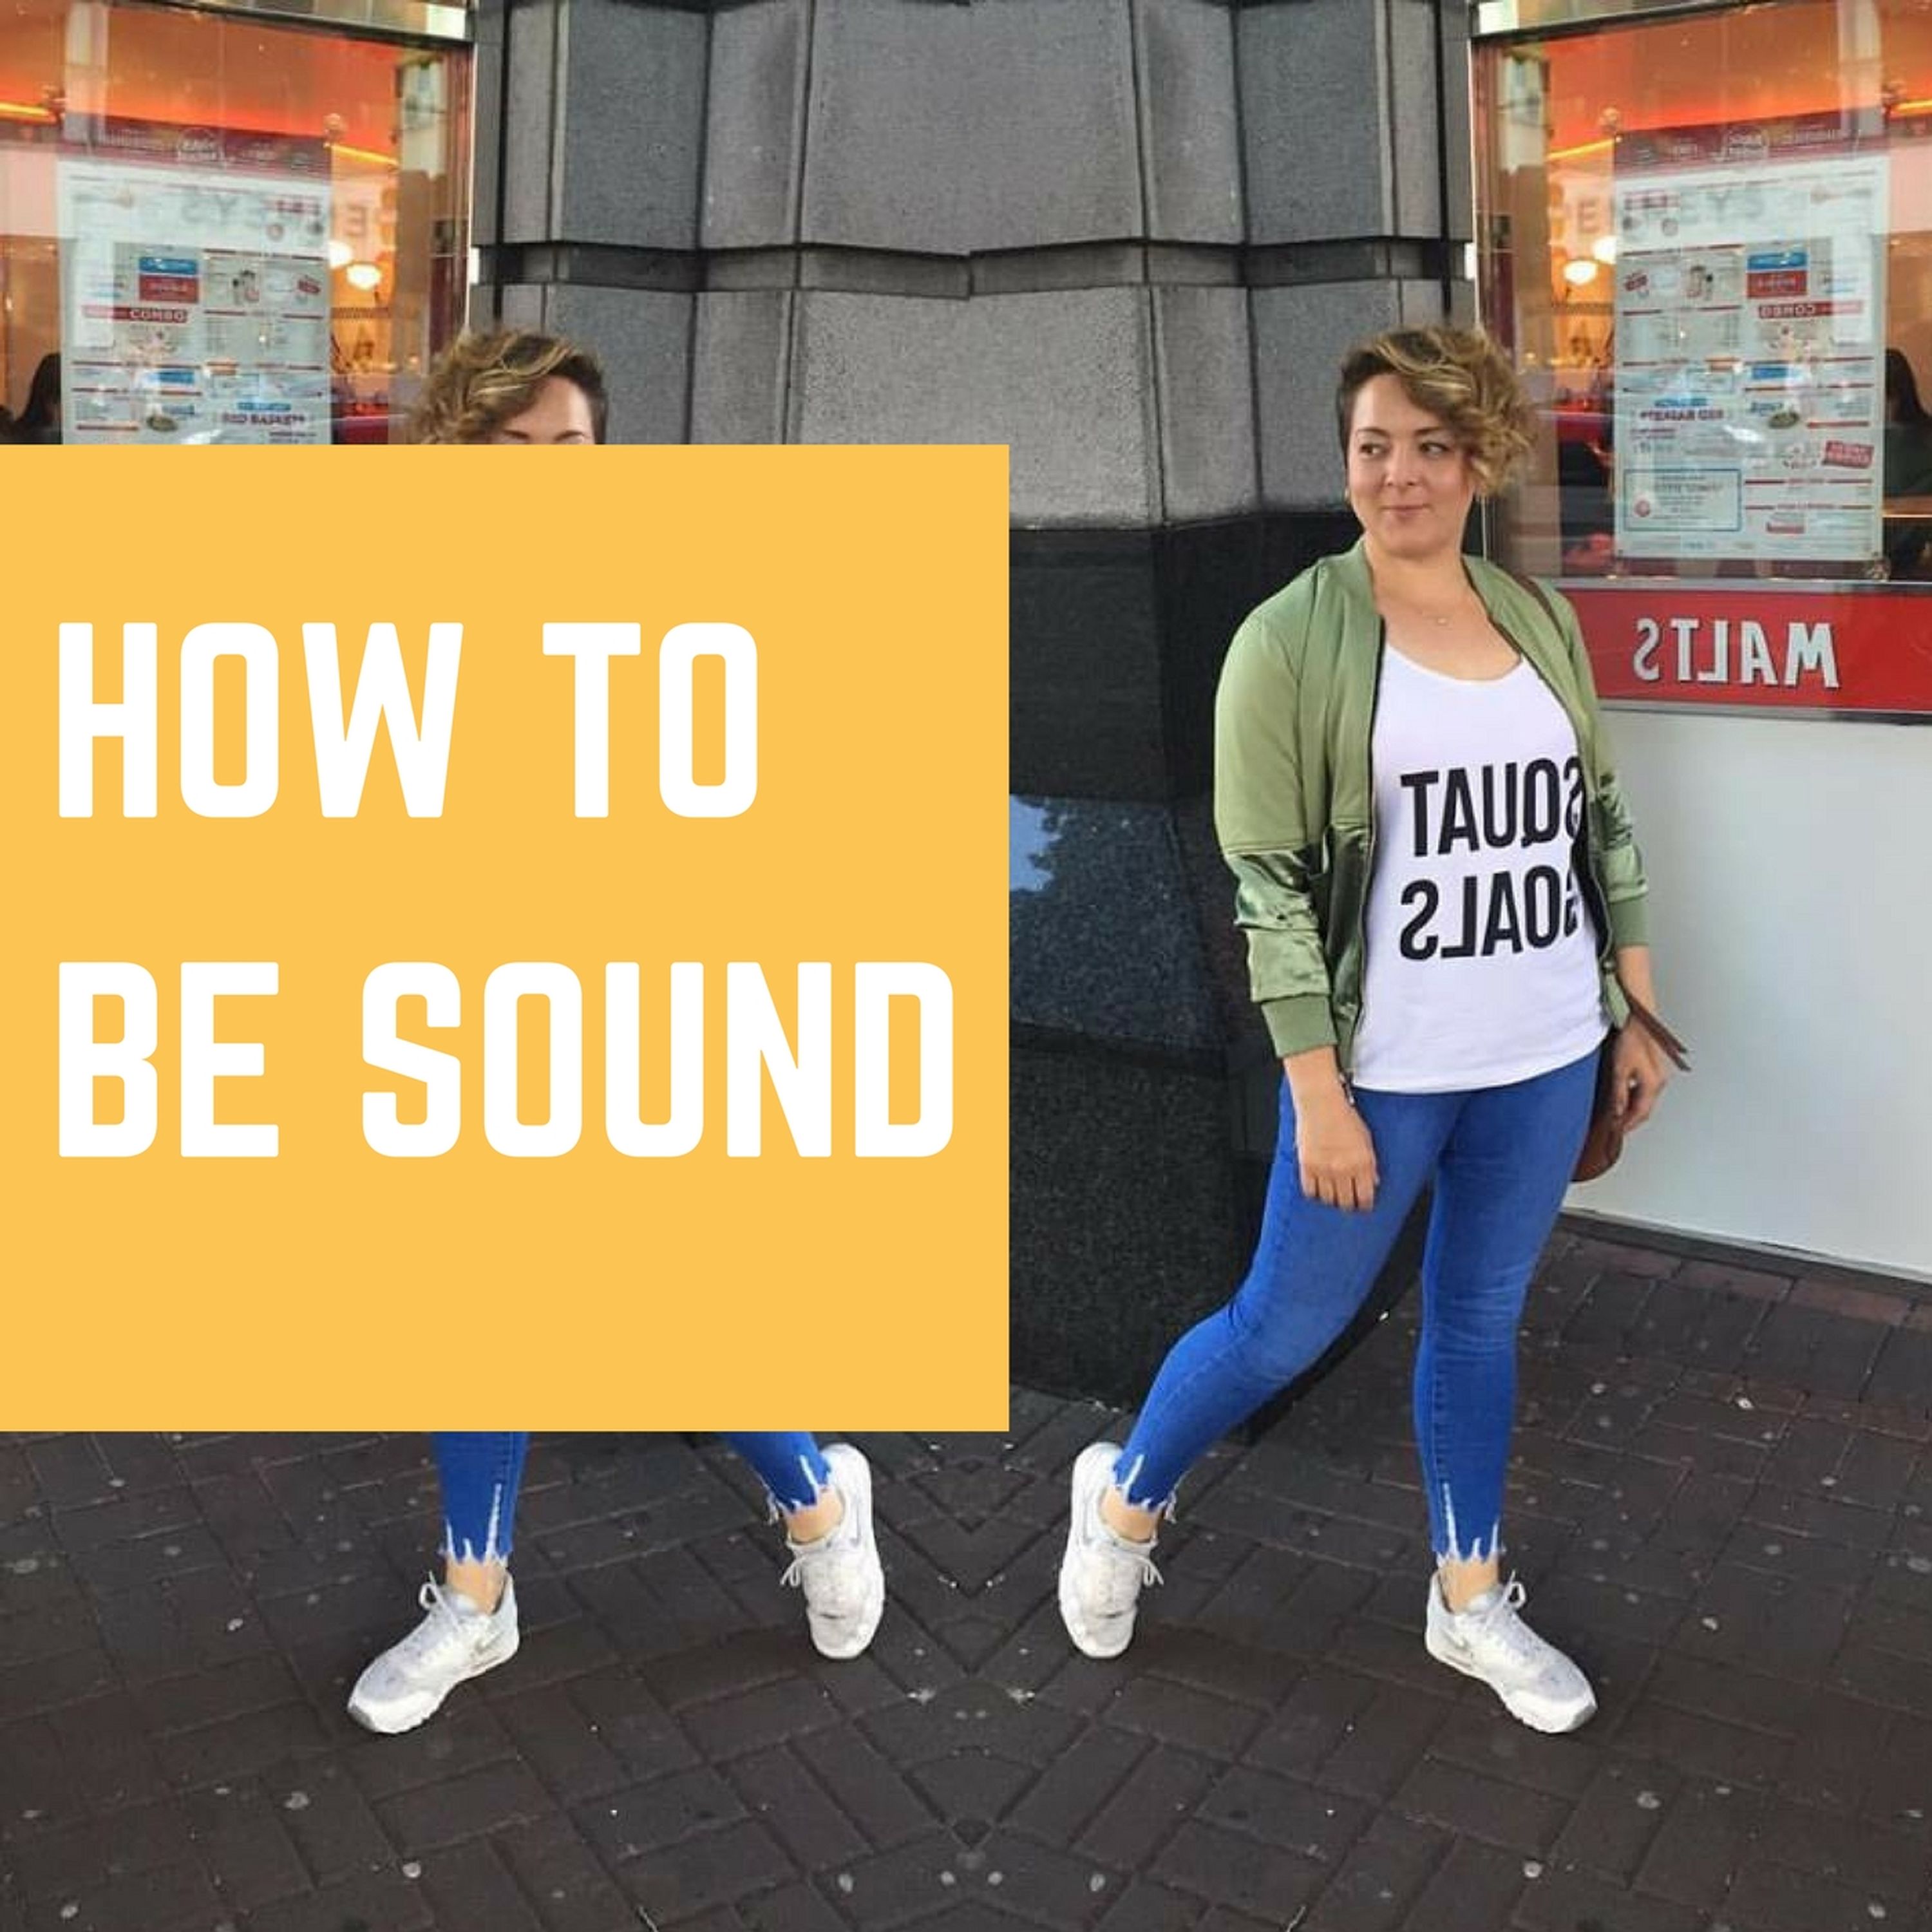 Ciara Norton on how to be sound